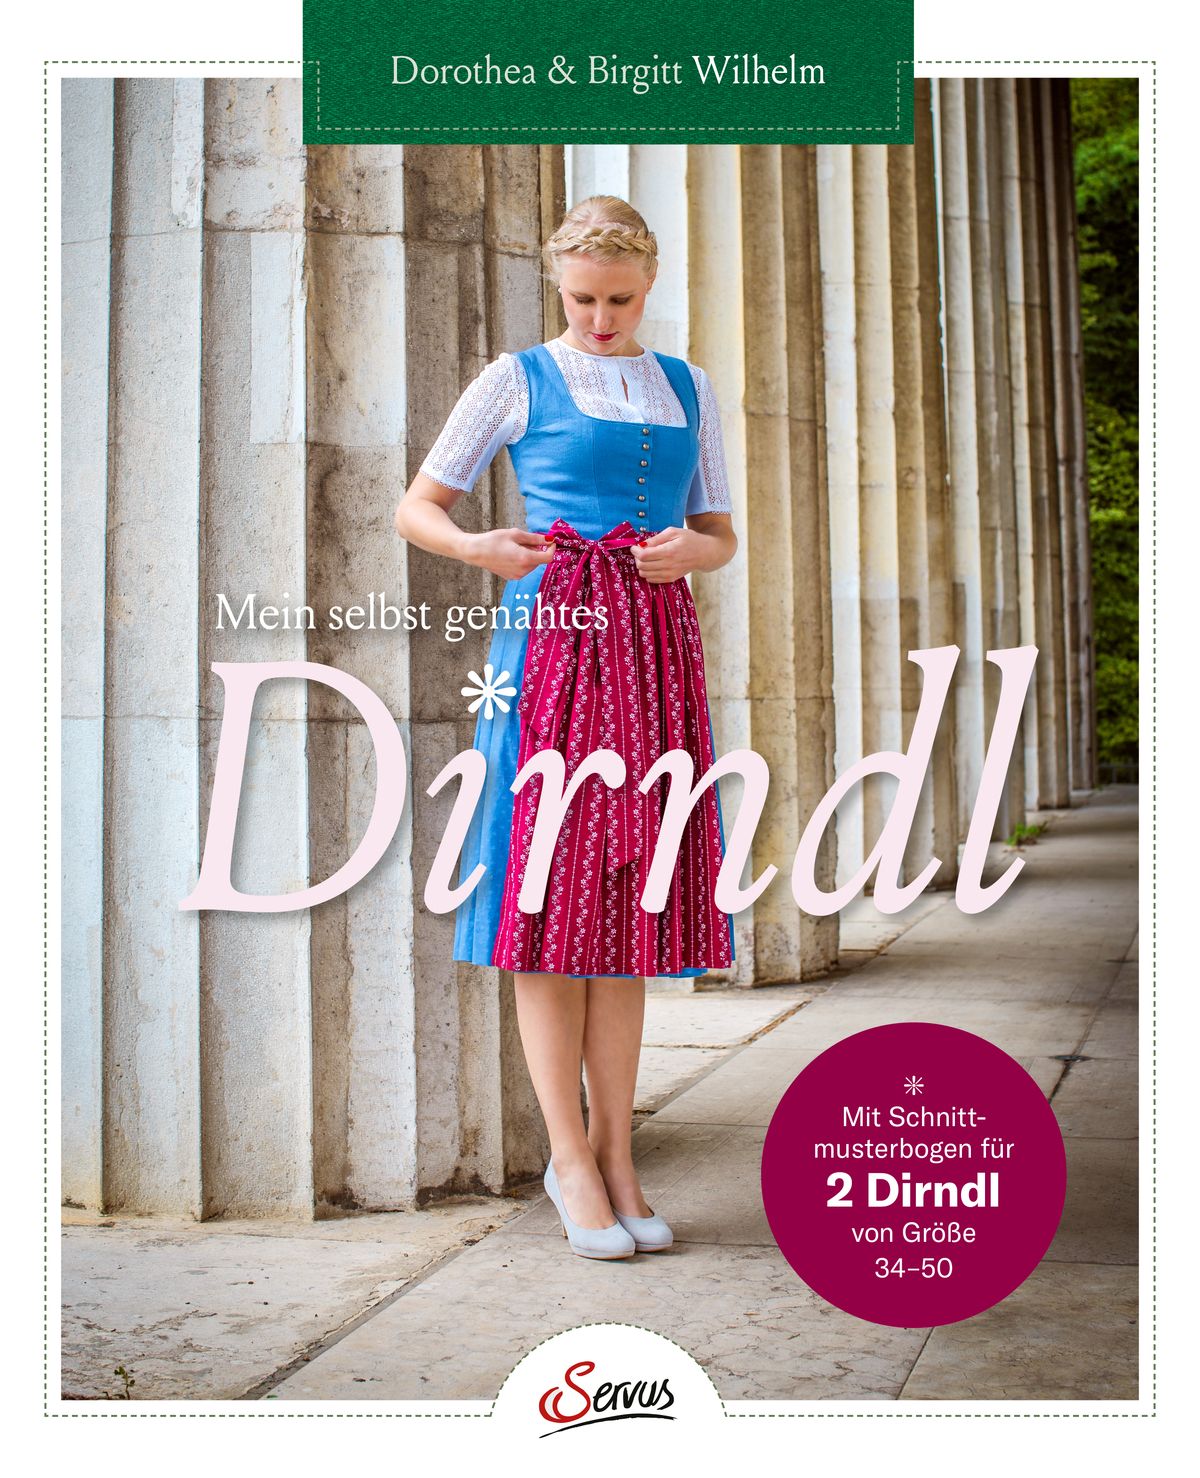 „Mein selbst genähtes Dirndl“ Dorothea & Birgitt Wilhelm Servus ISBN-13 9783710402197